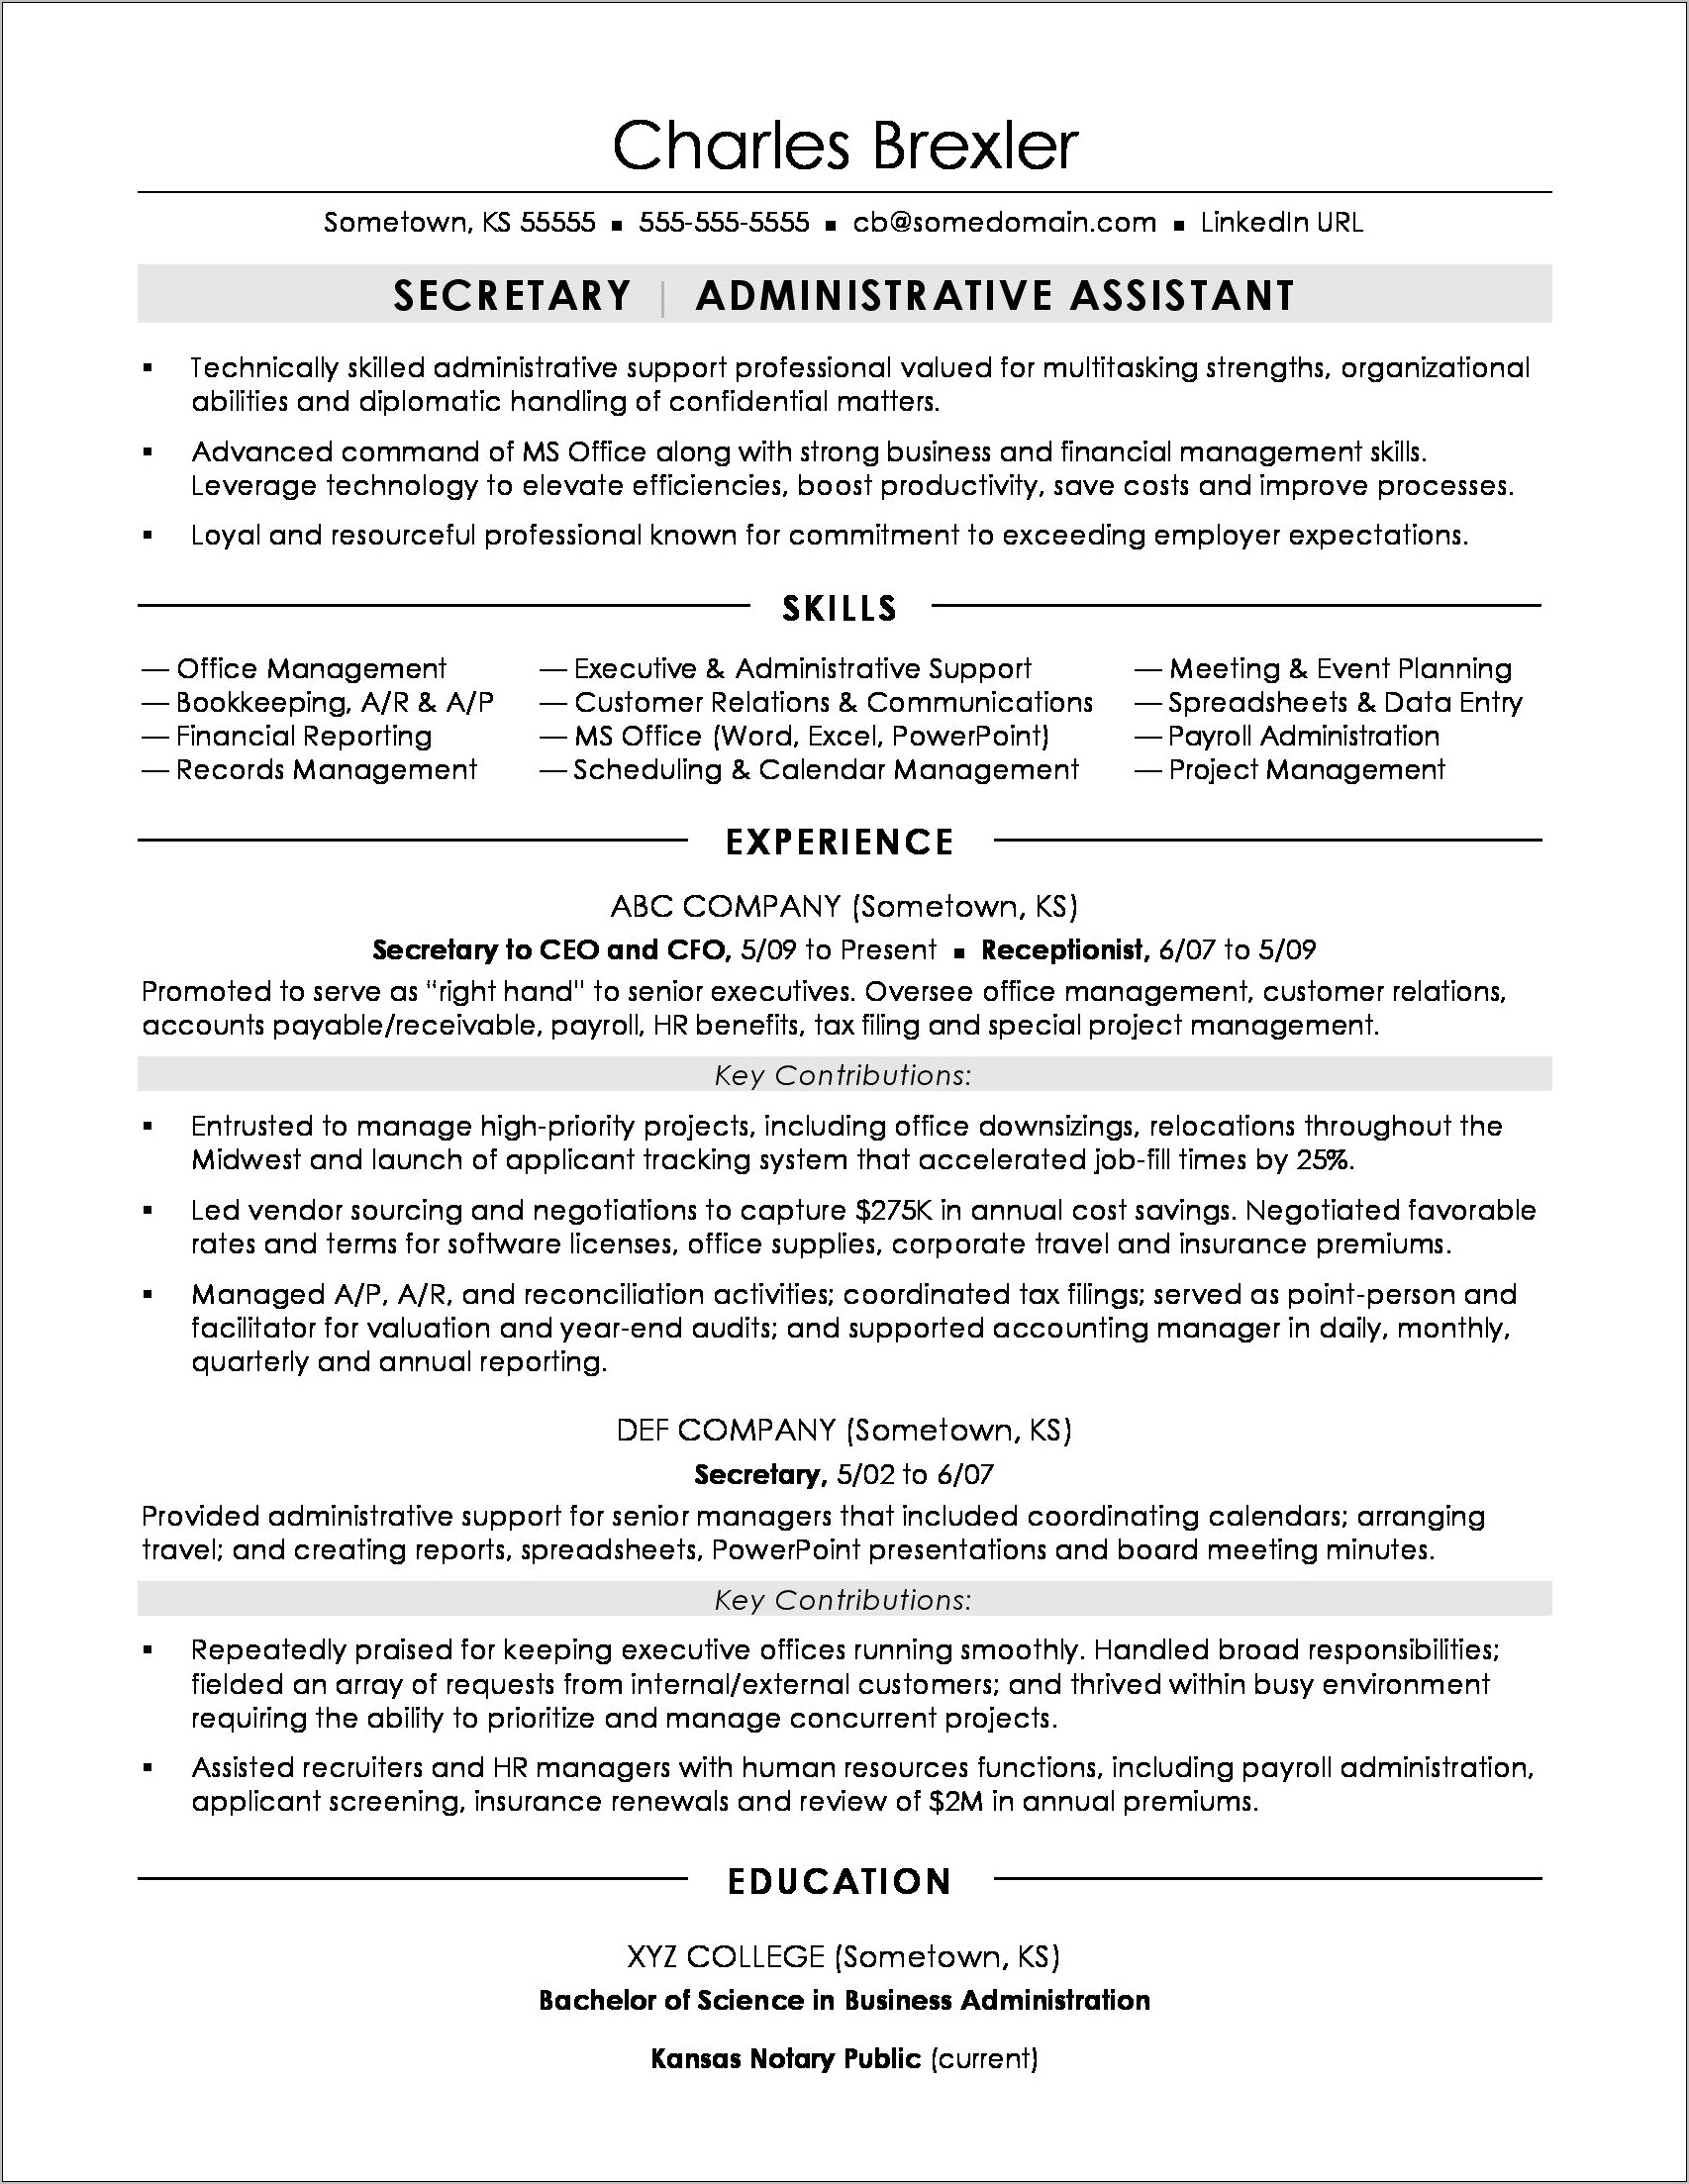 Resume Objective Profile Or Executive